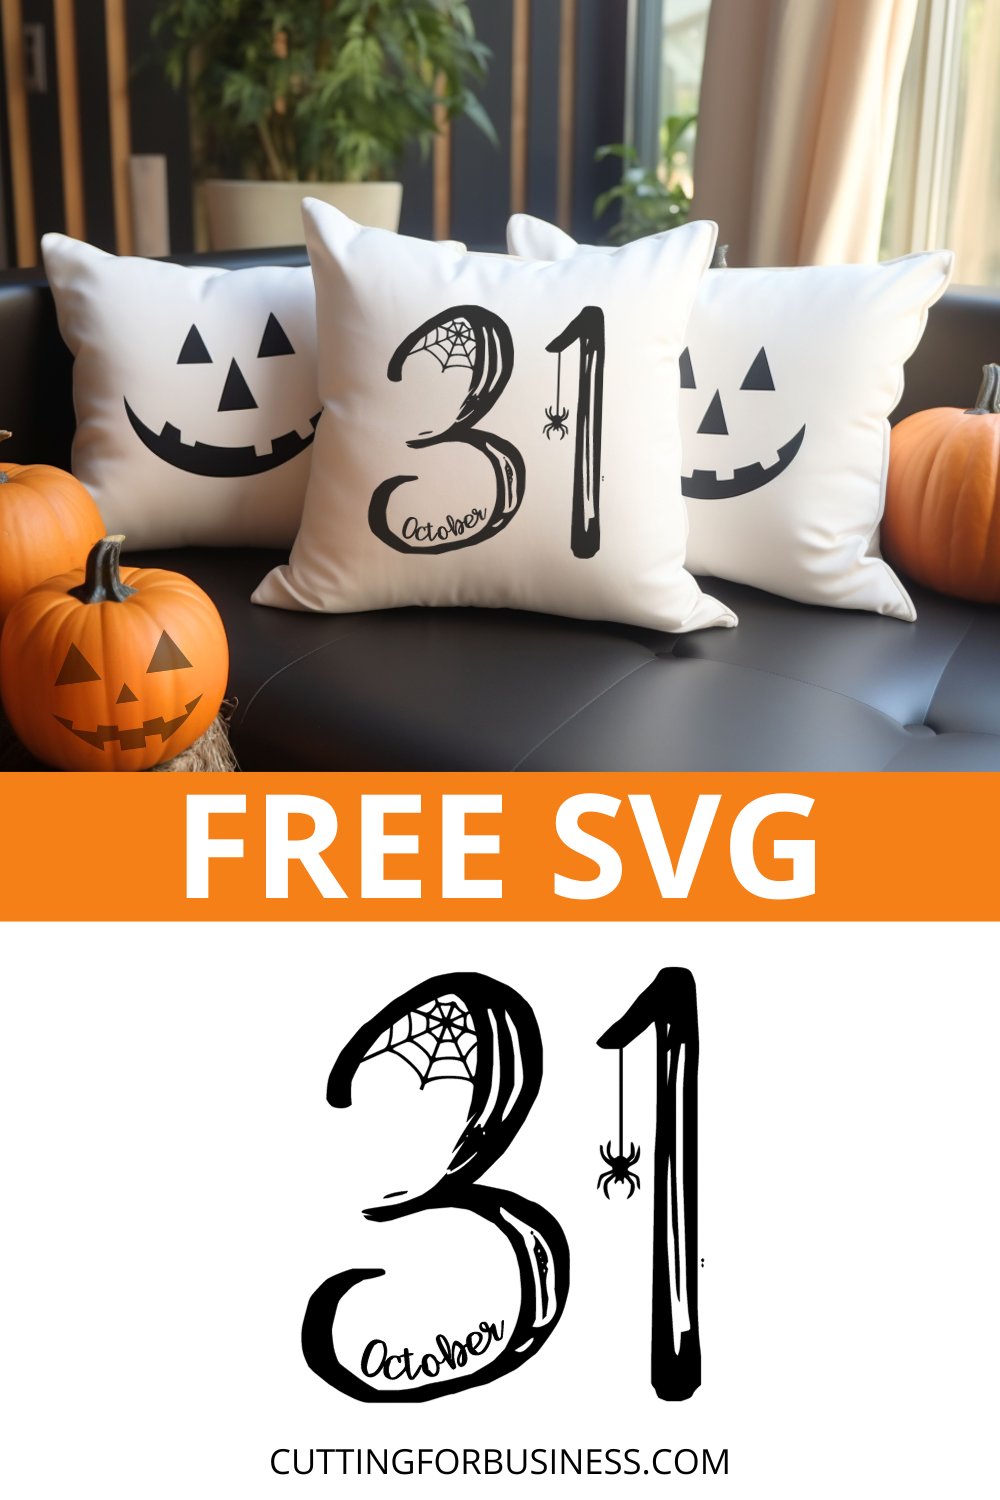 Free October 31 SVG - cuttingforbusiness.com